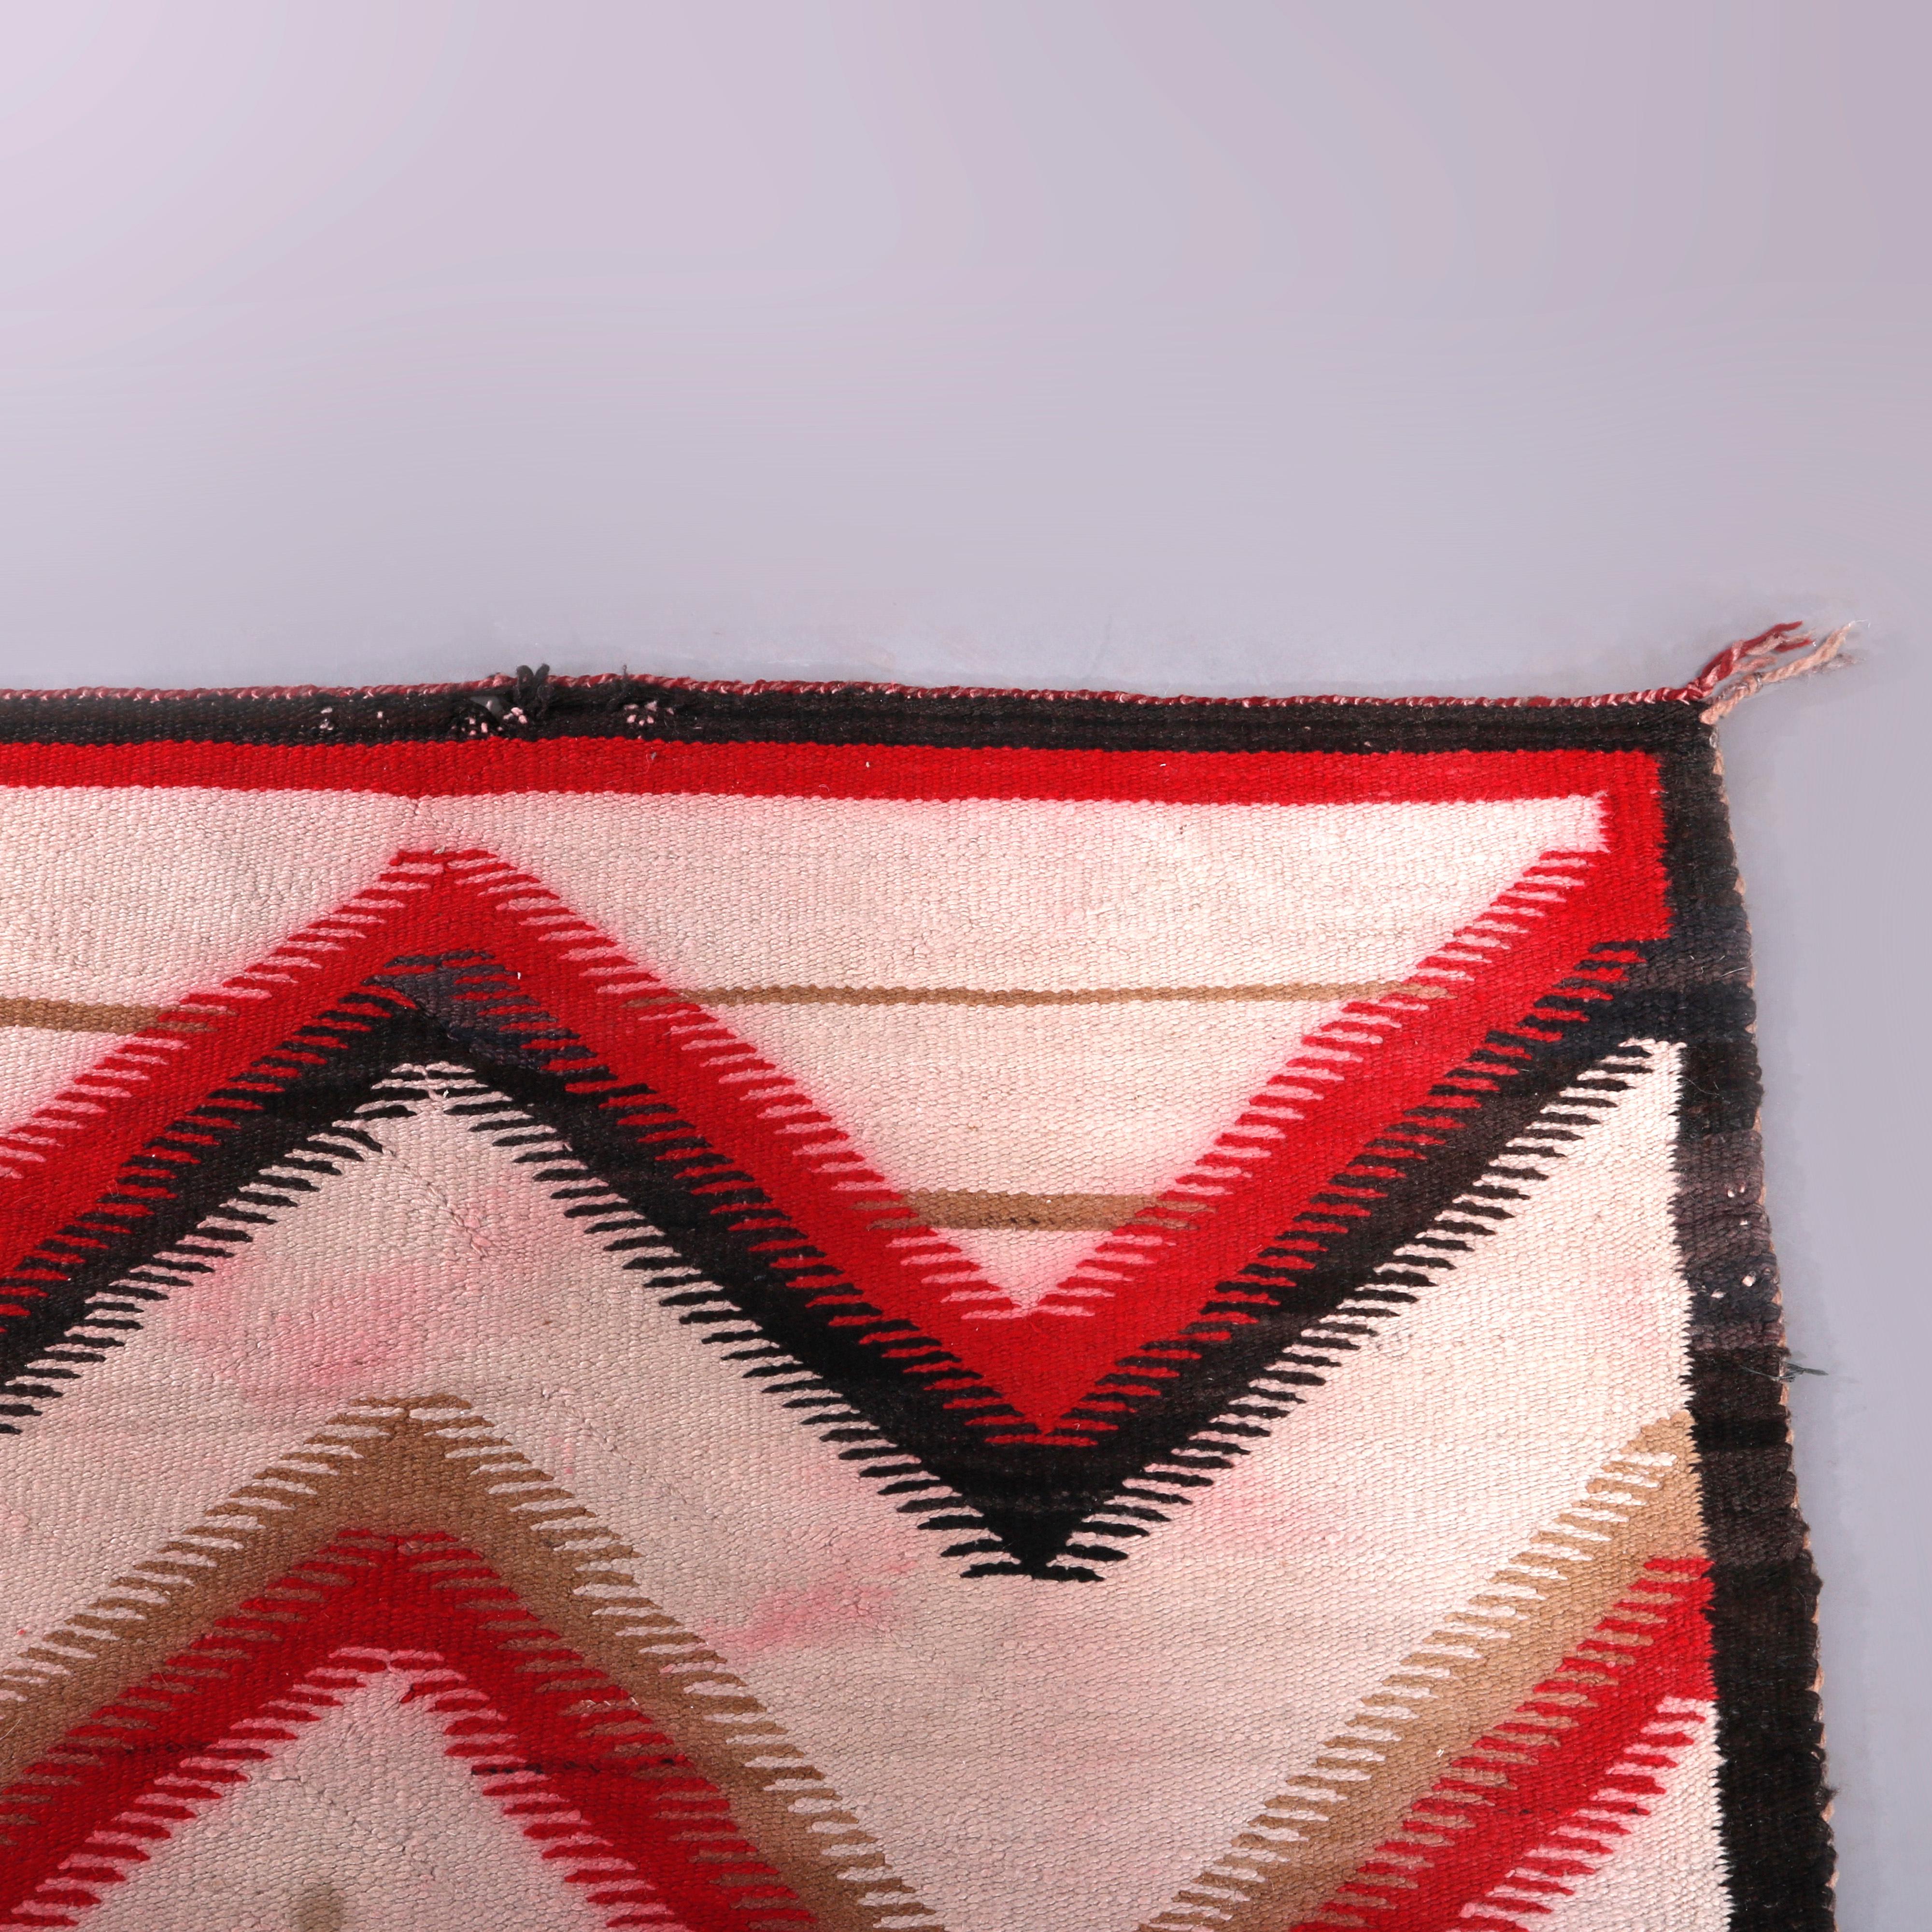 Woven Vintage Rug in the Manner of Ganado Navajo Weaving, 20th Century